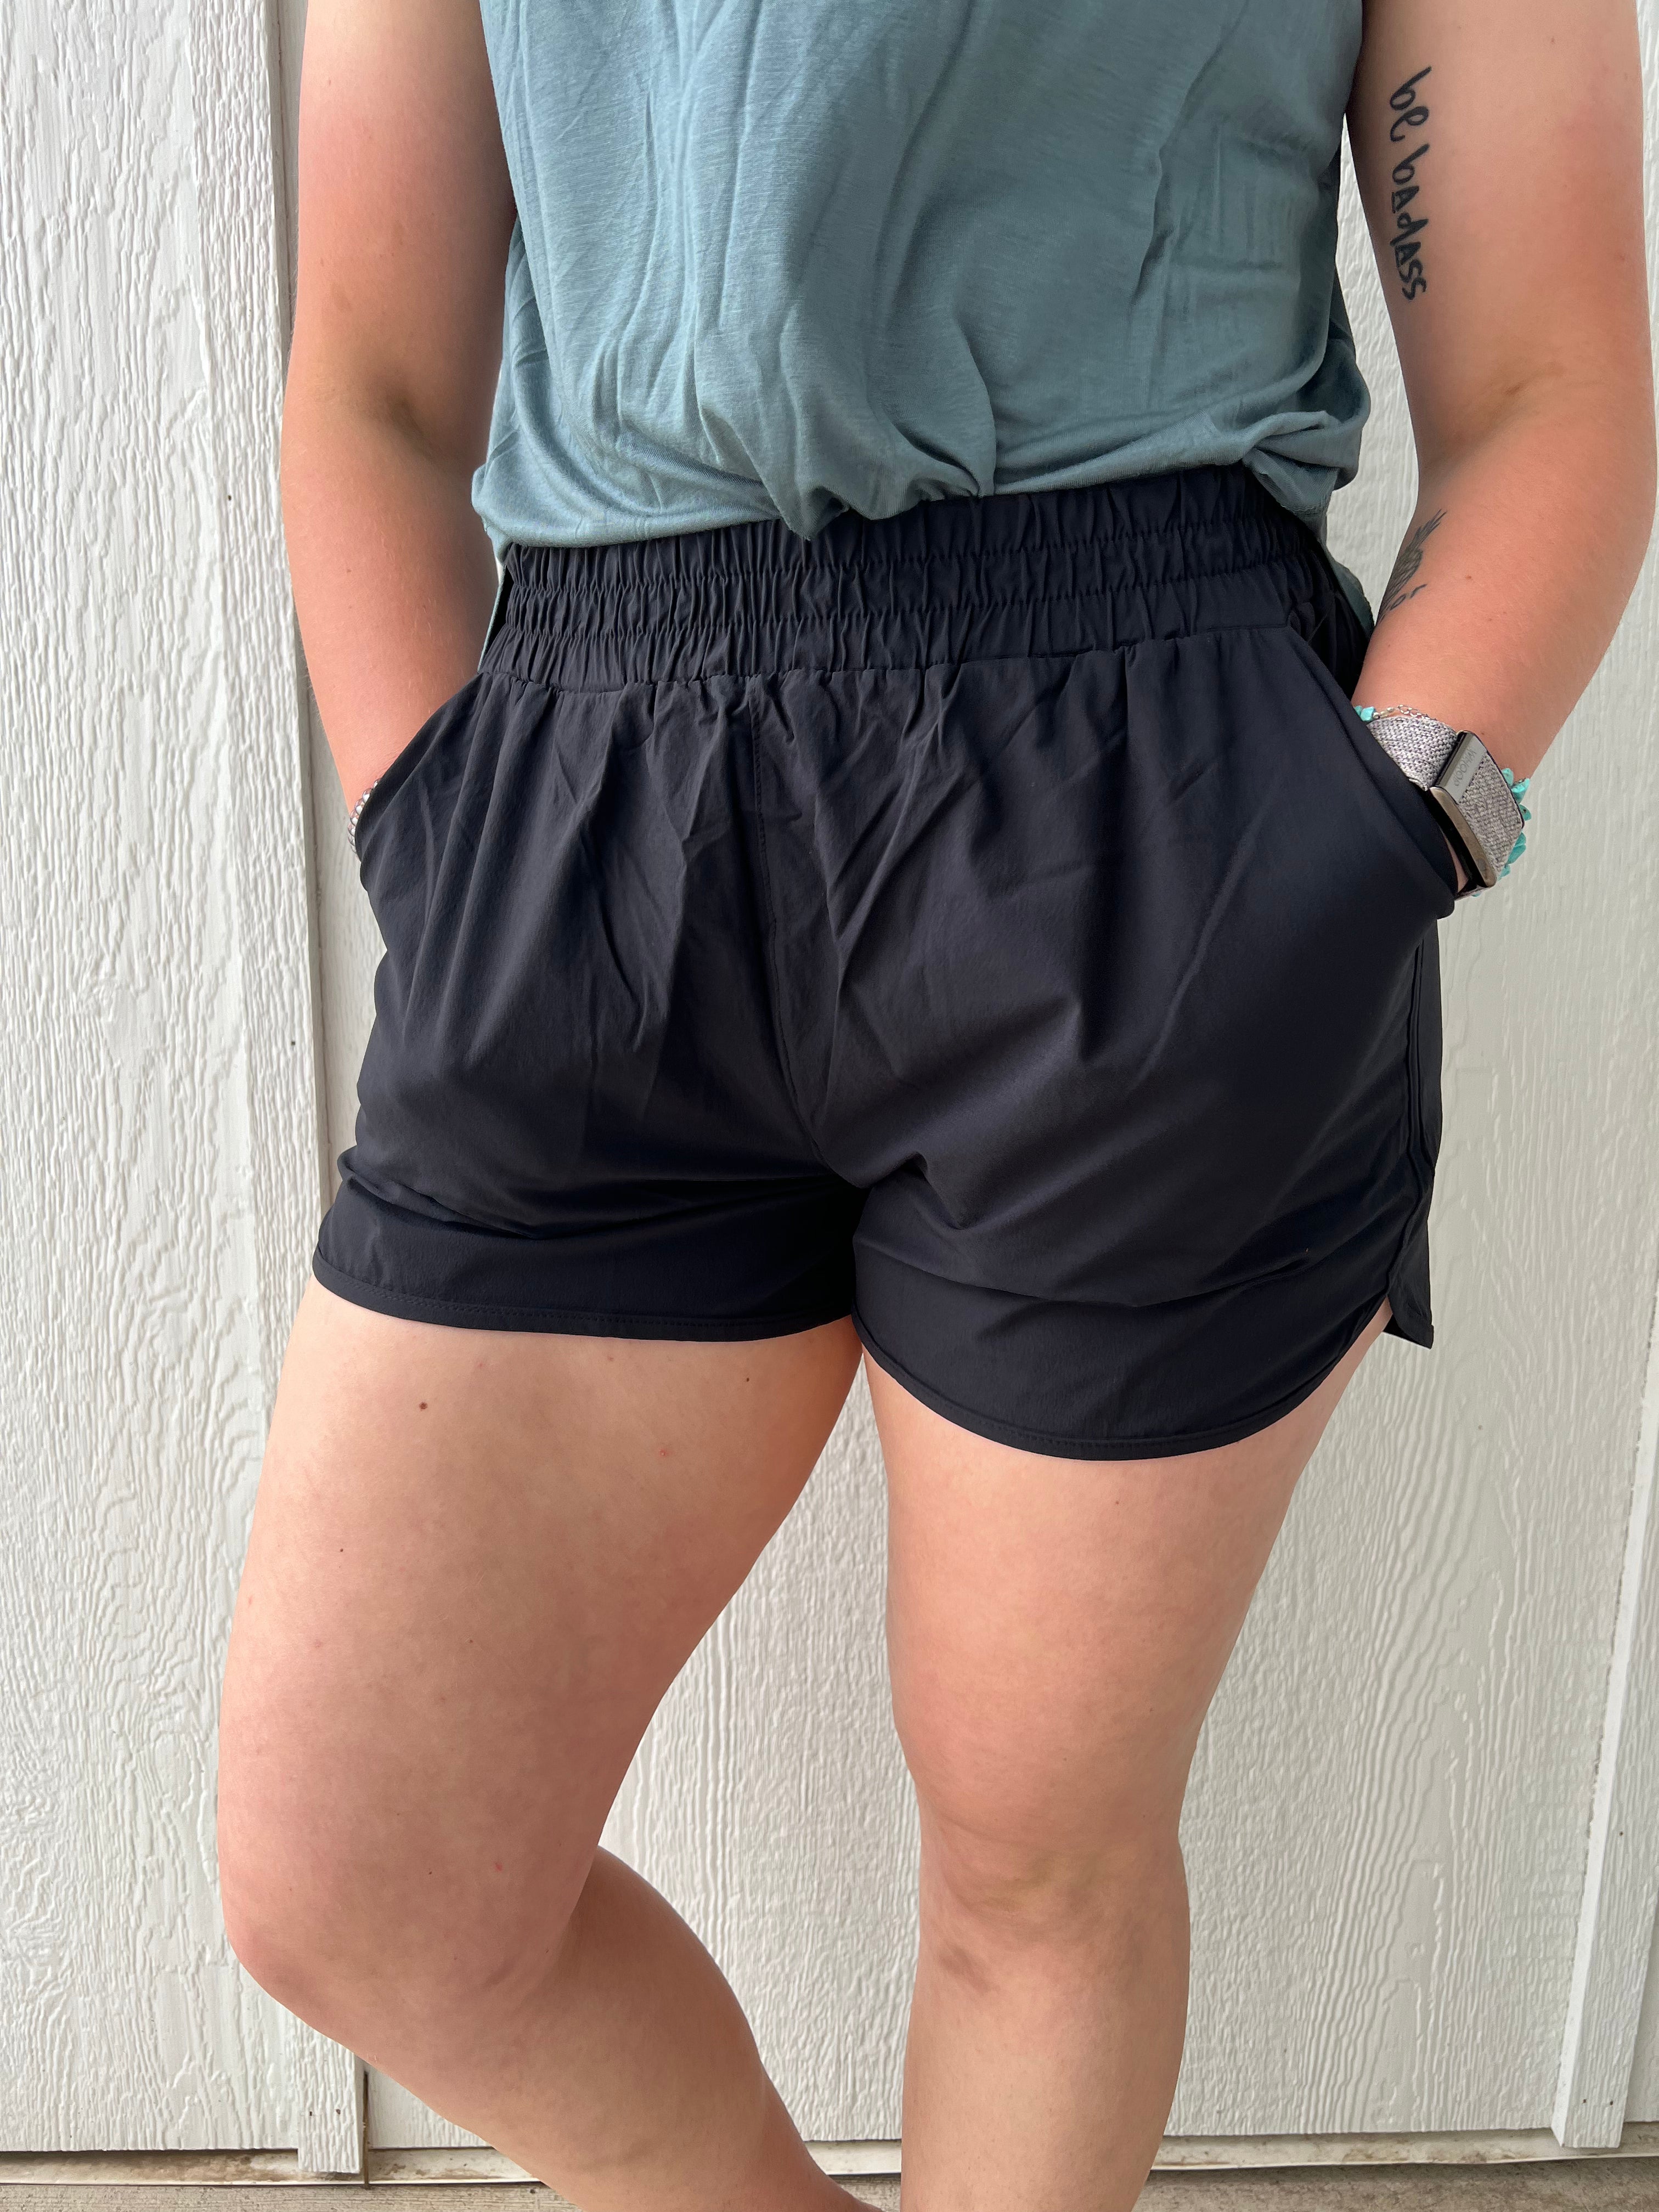 The Sydney Shorts